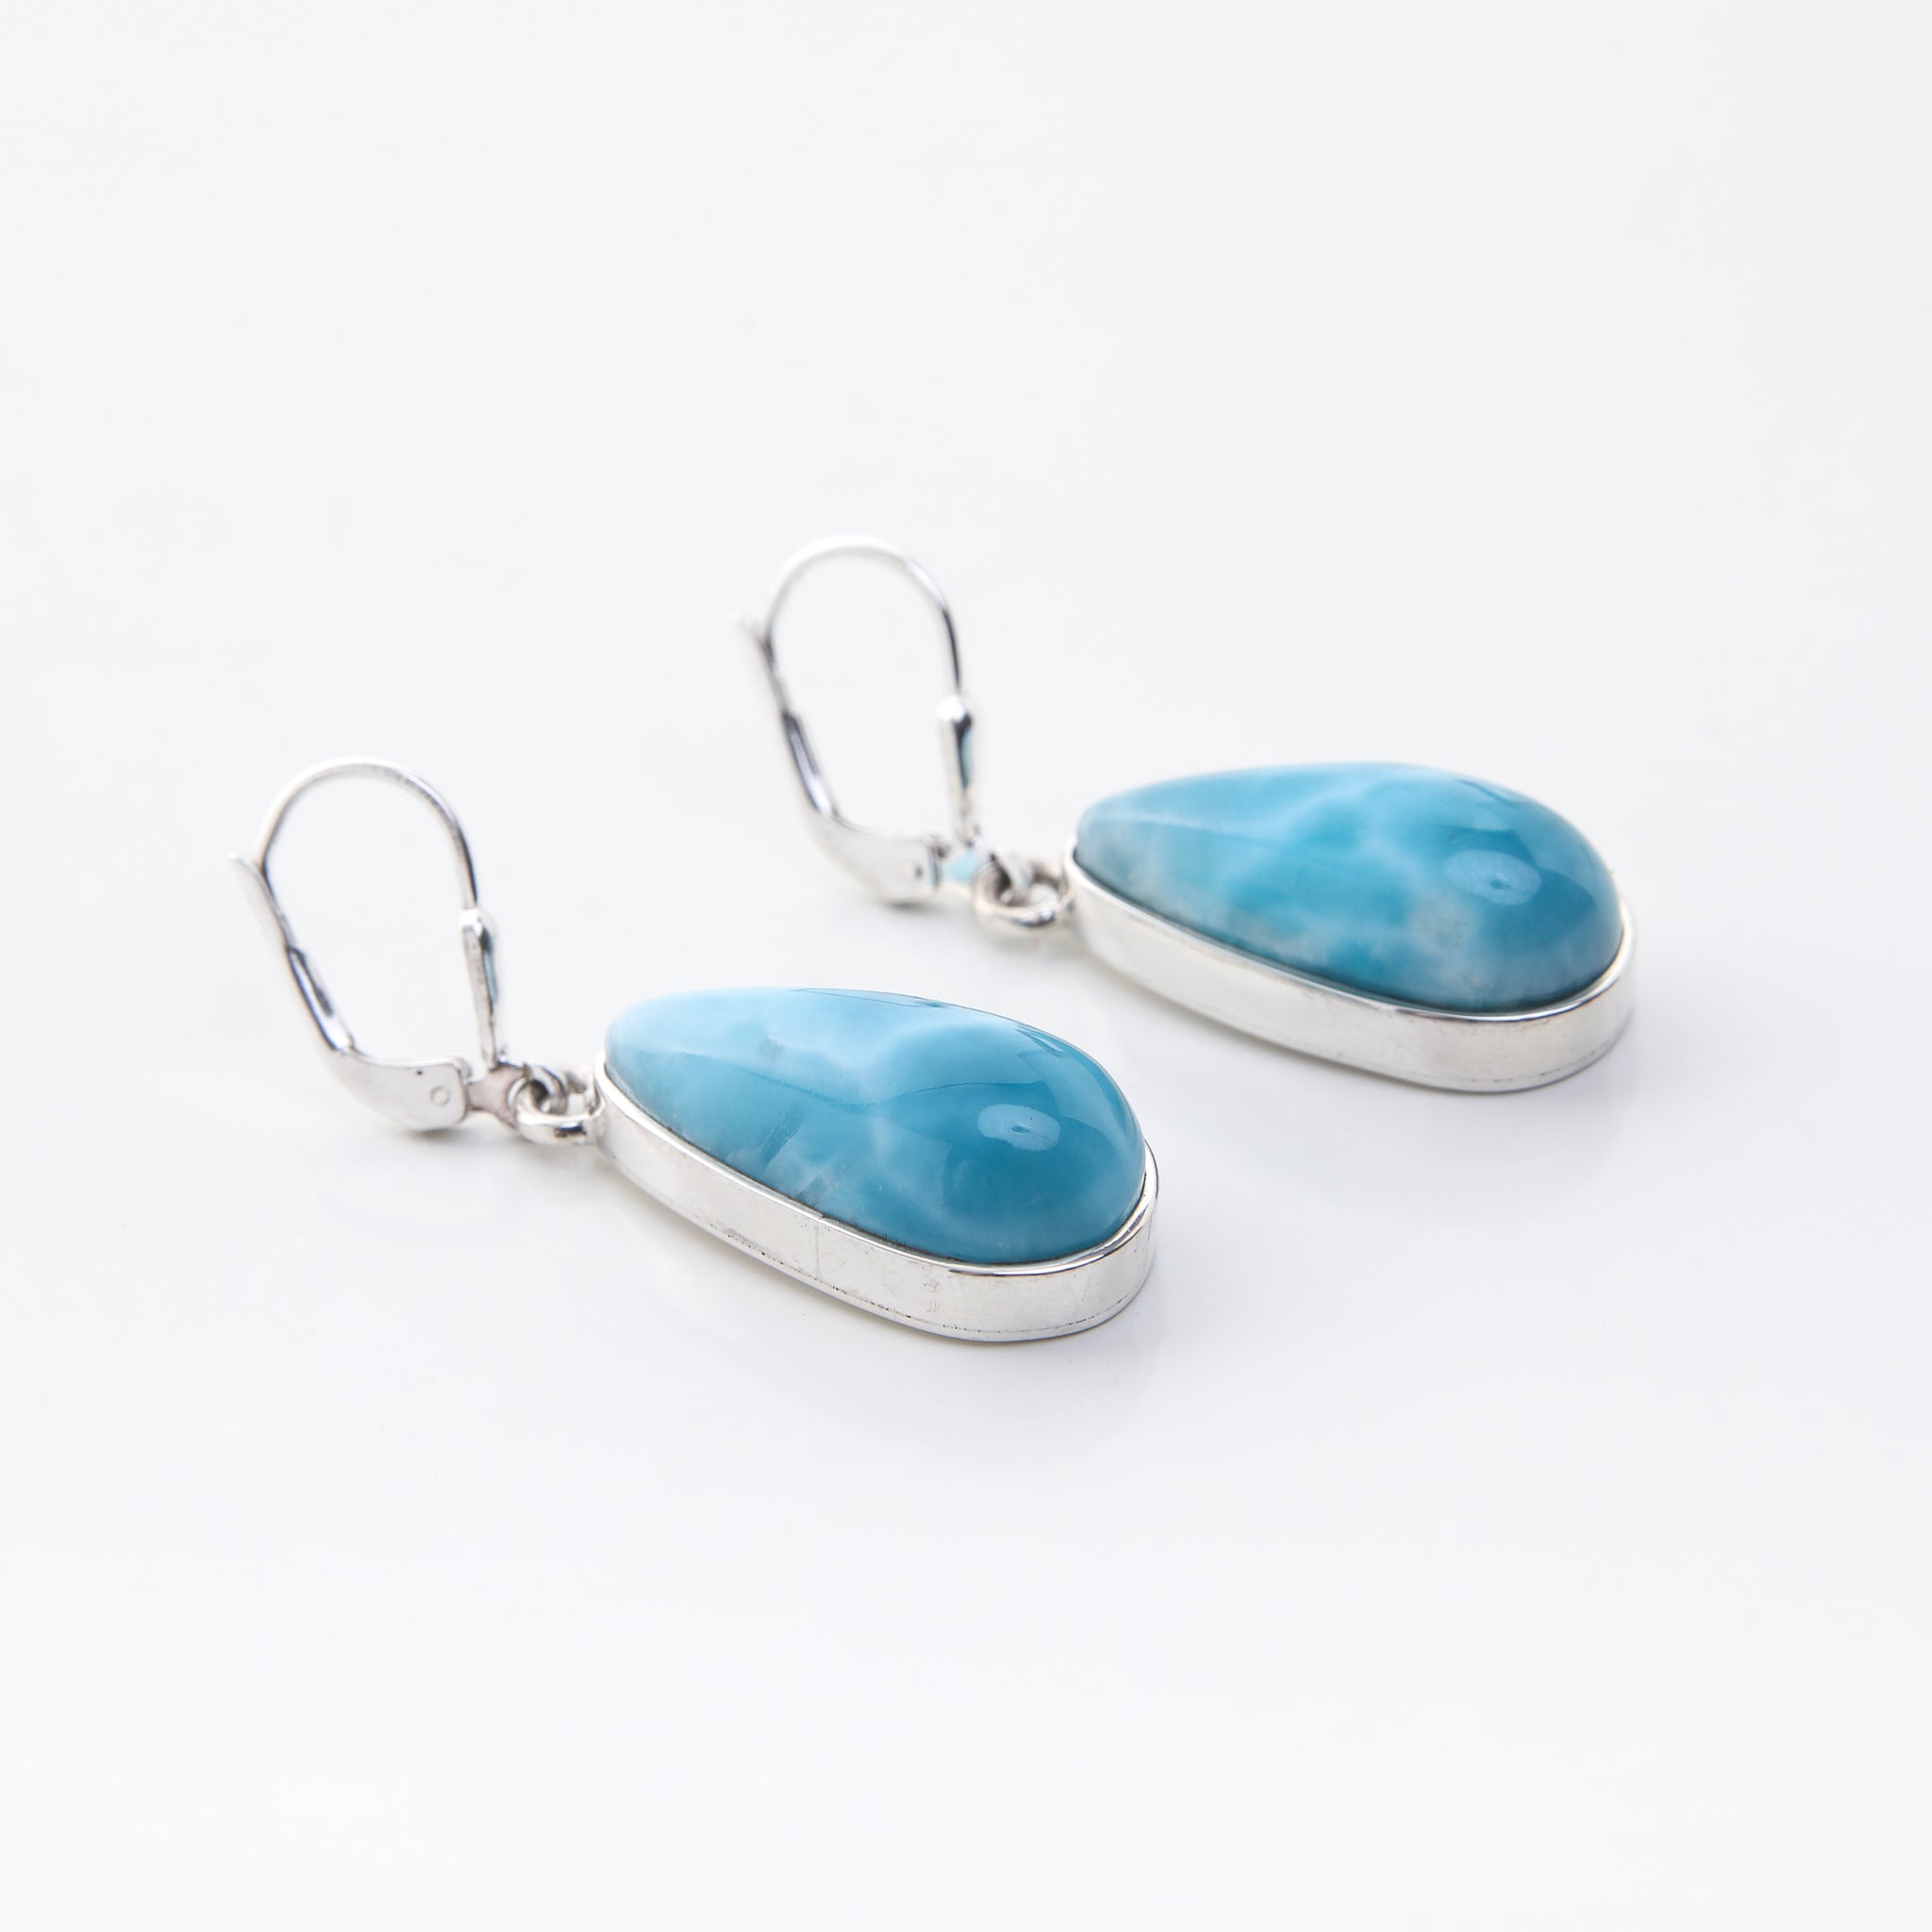 Volcanic-blue-Larimar-drop-earrings